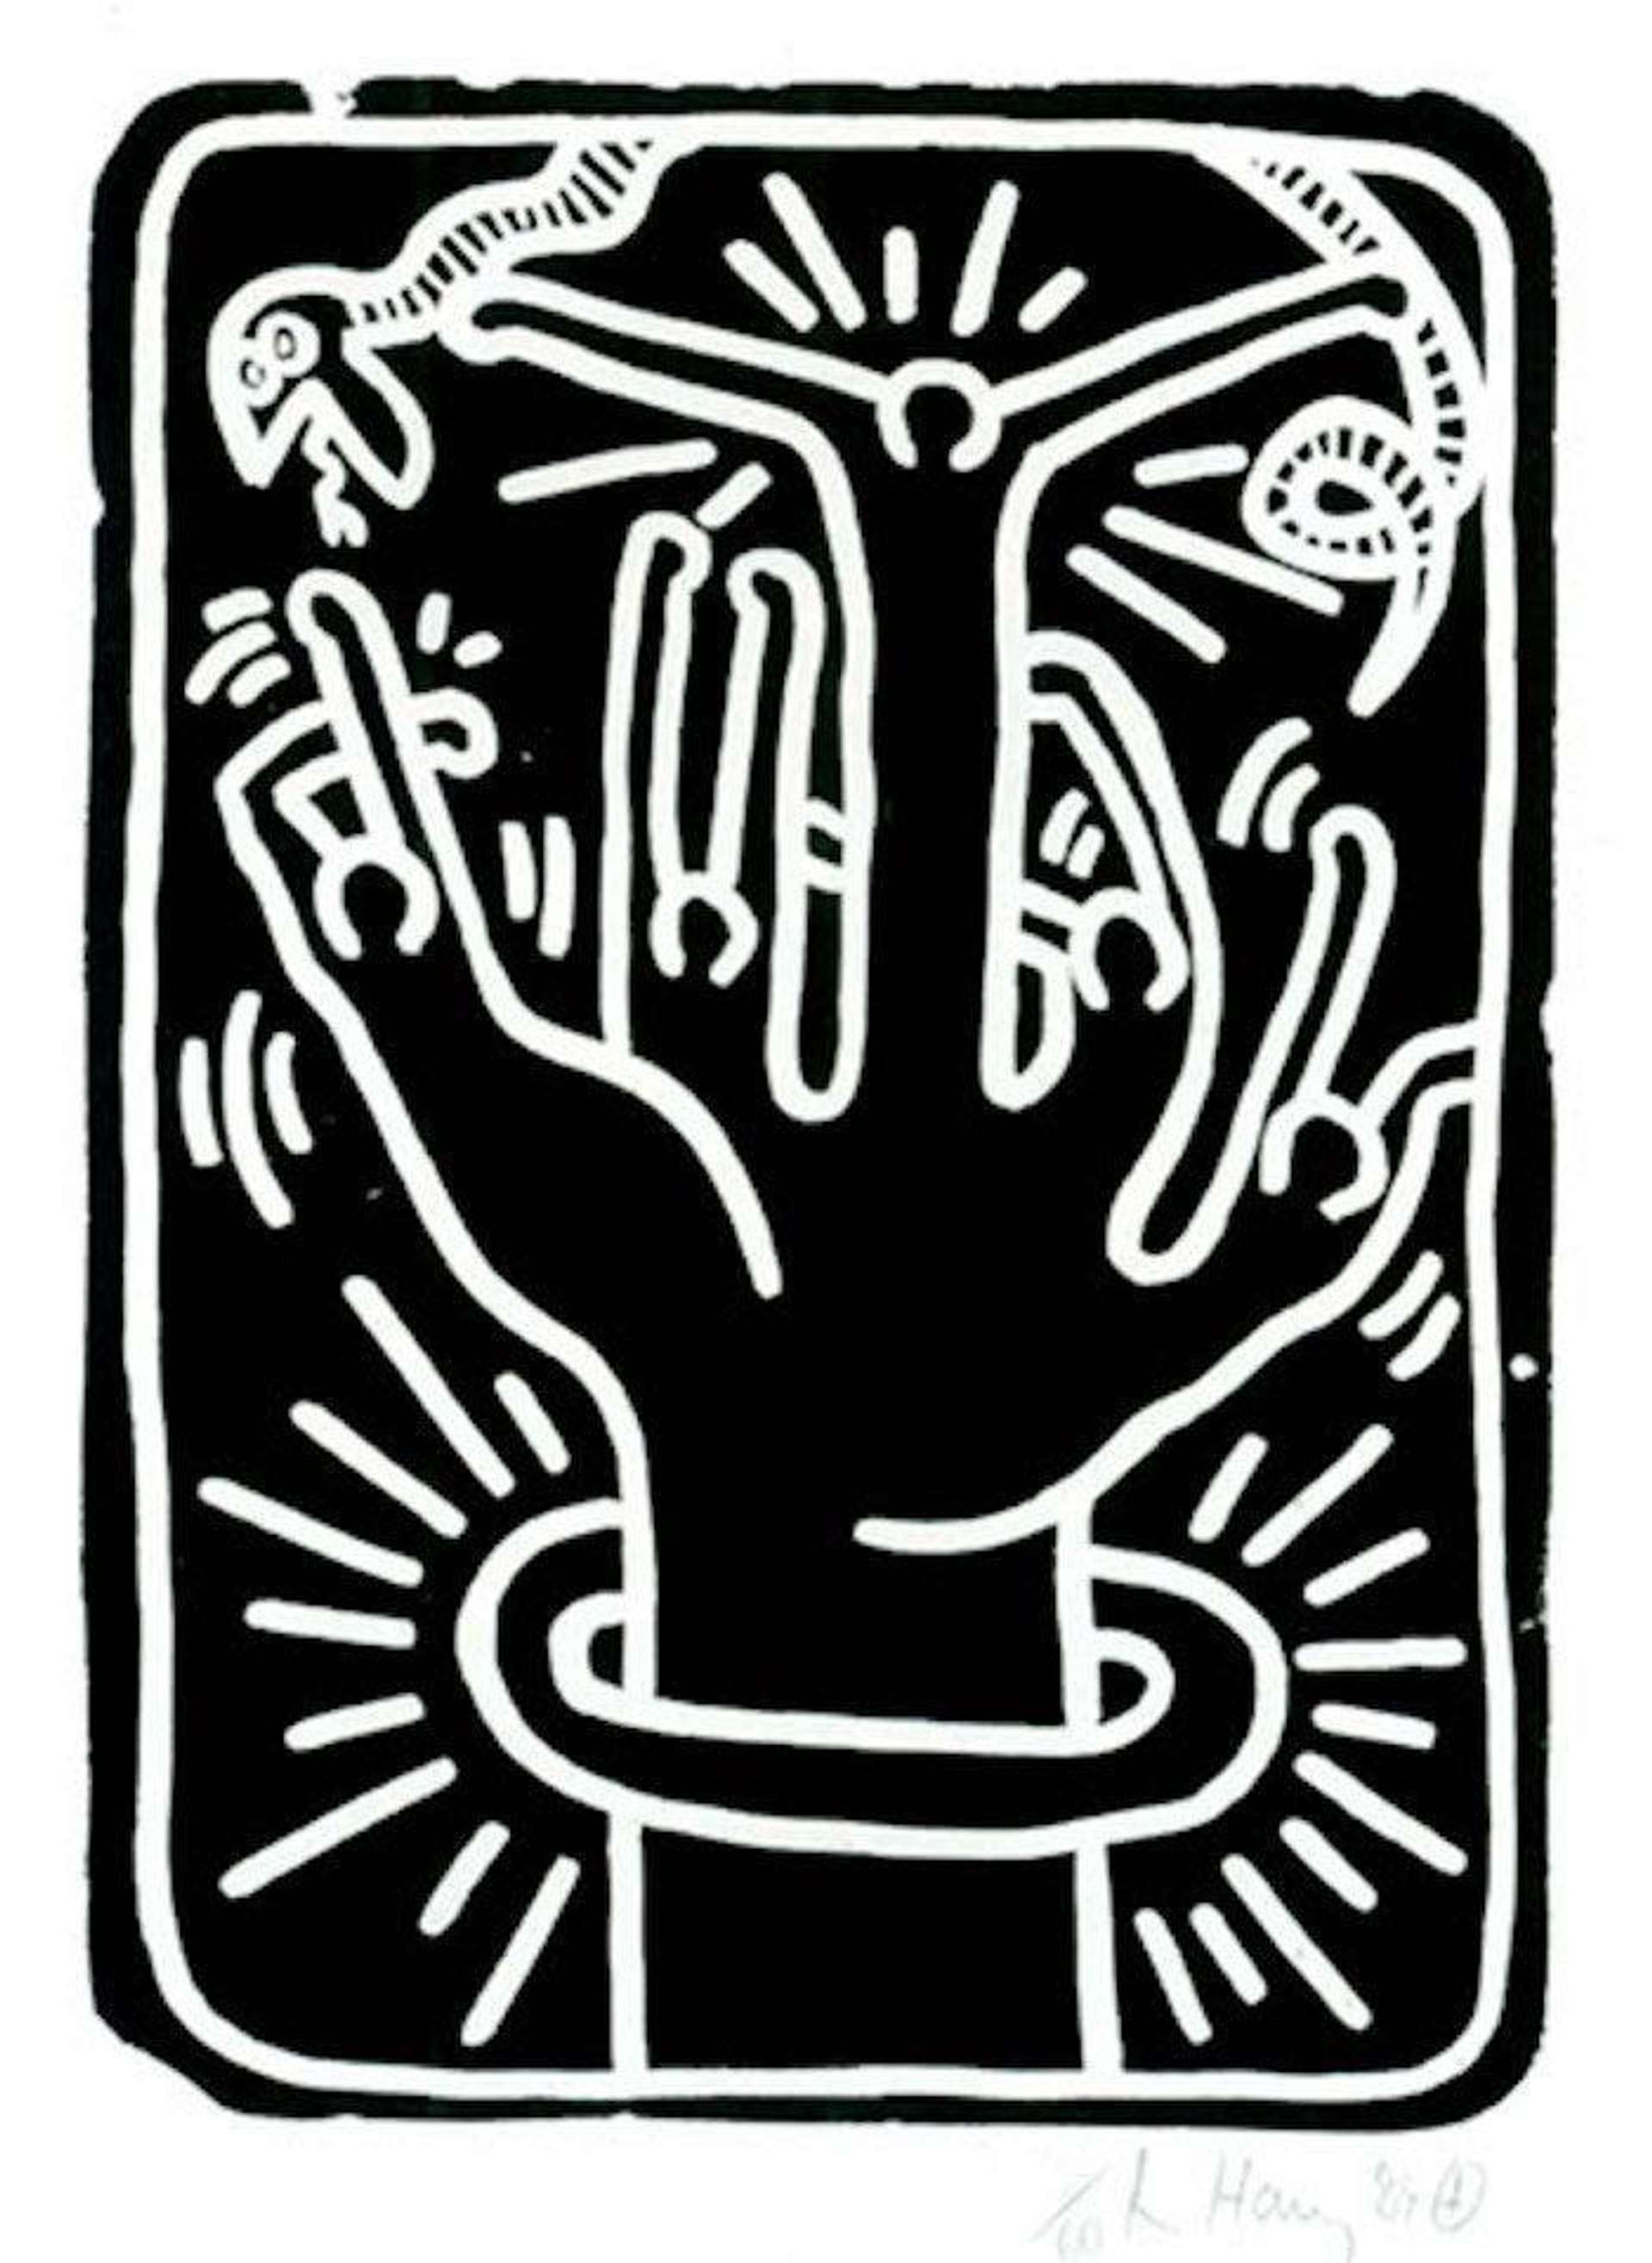 Stones 2 - Signed Print by Keith Haring 1989 - MyArtBroker